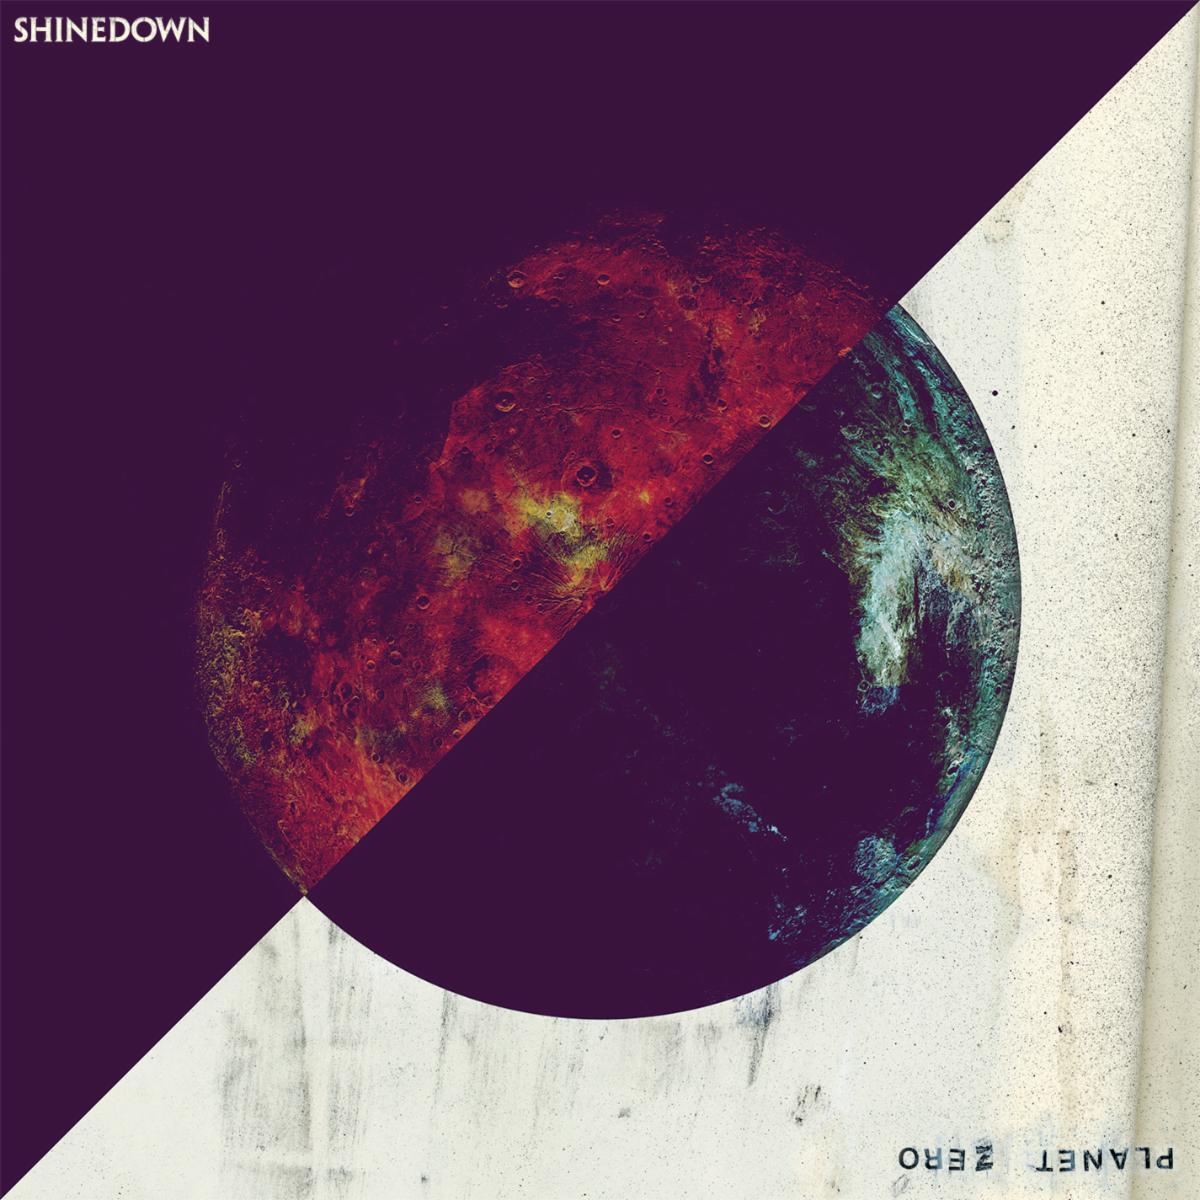 Shinedown Releases "Planet Zero" Music Video